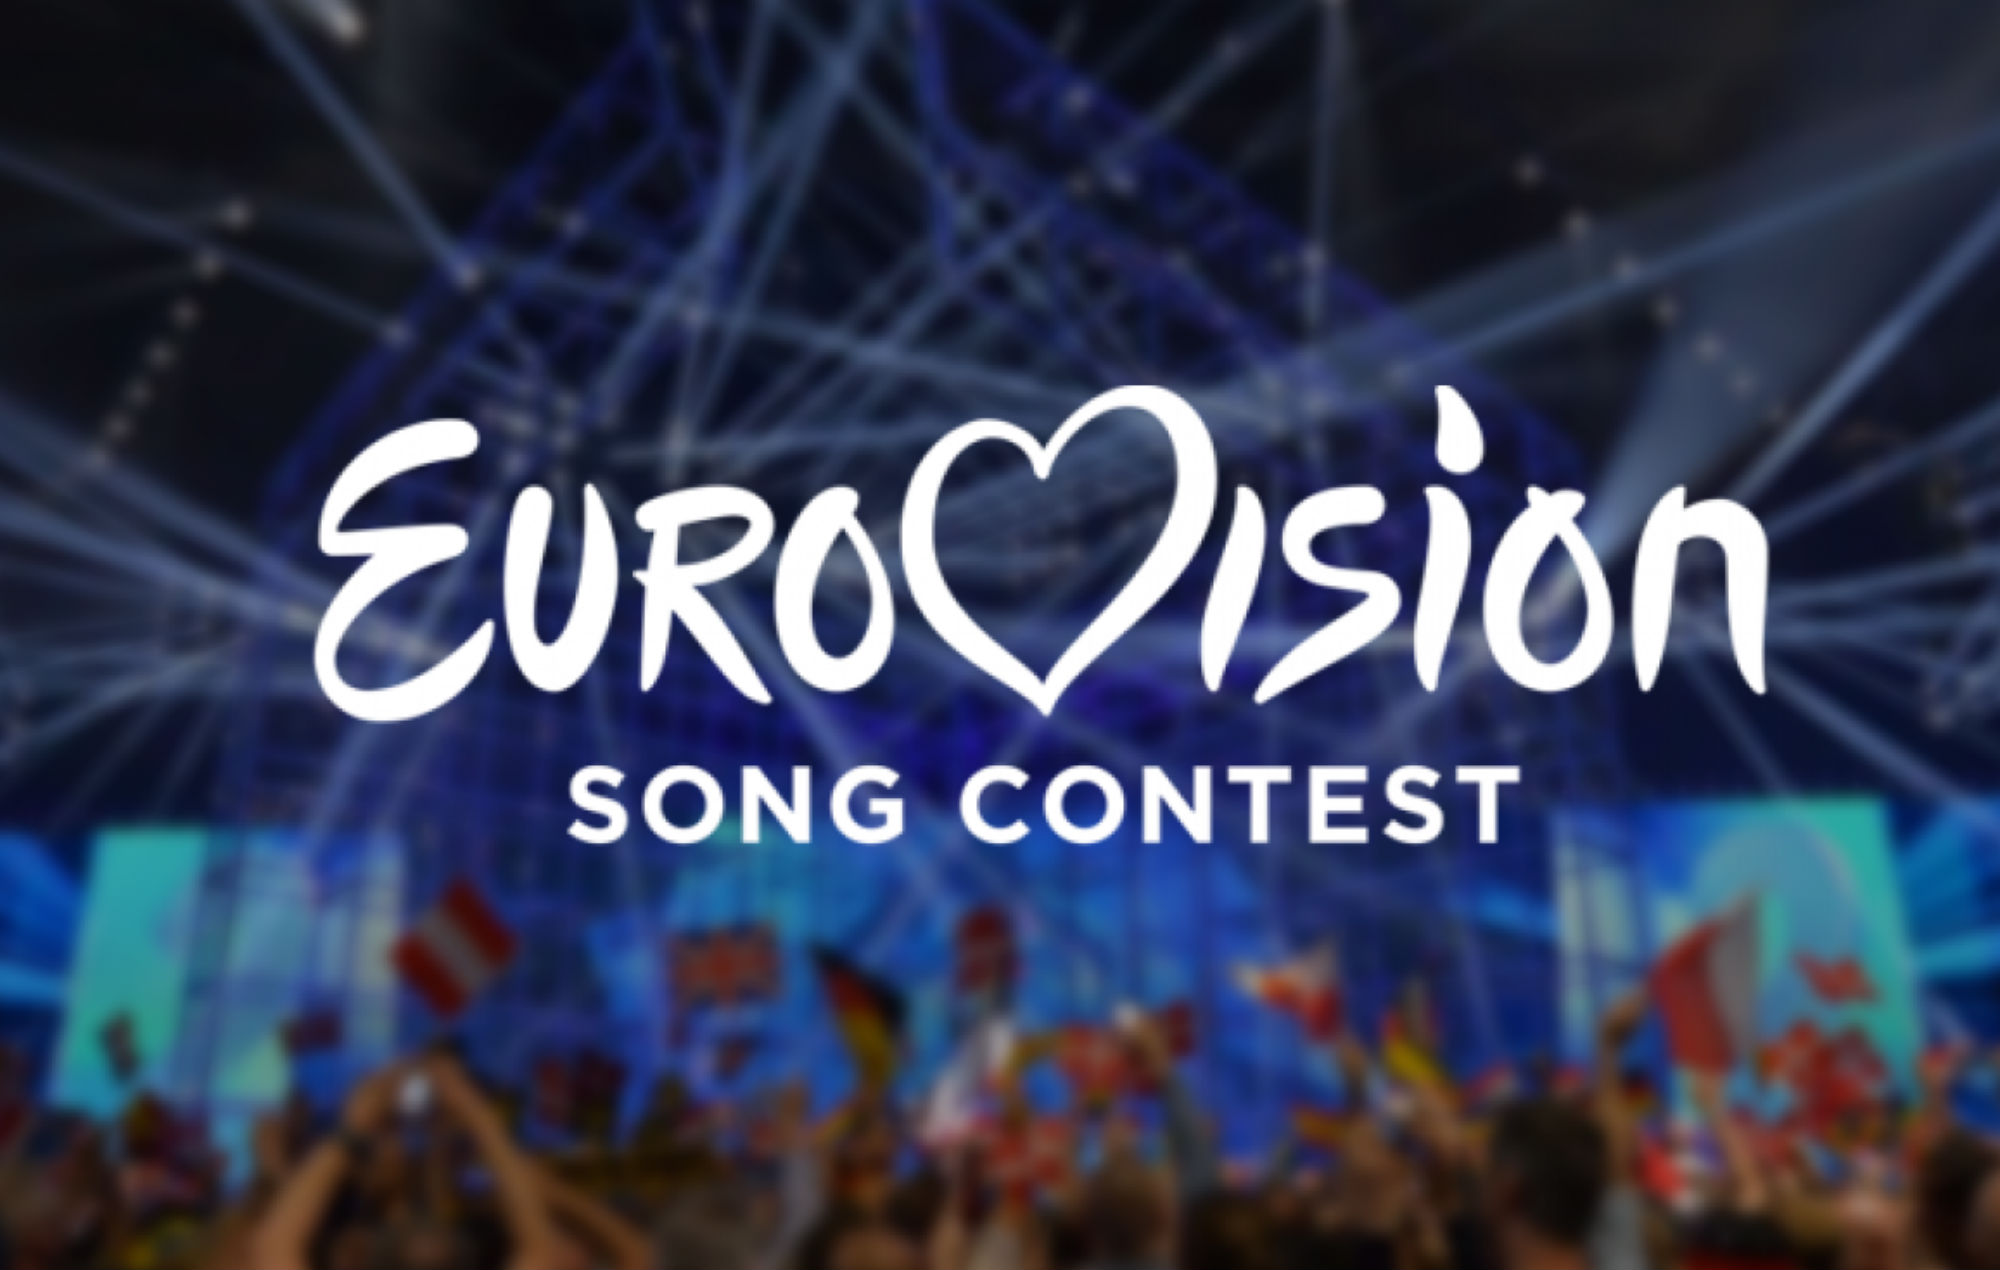 eurovision contest євробачення